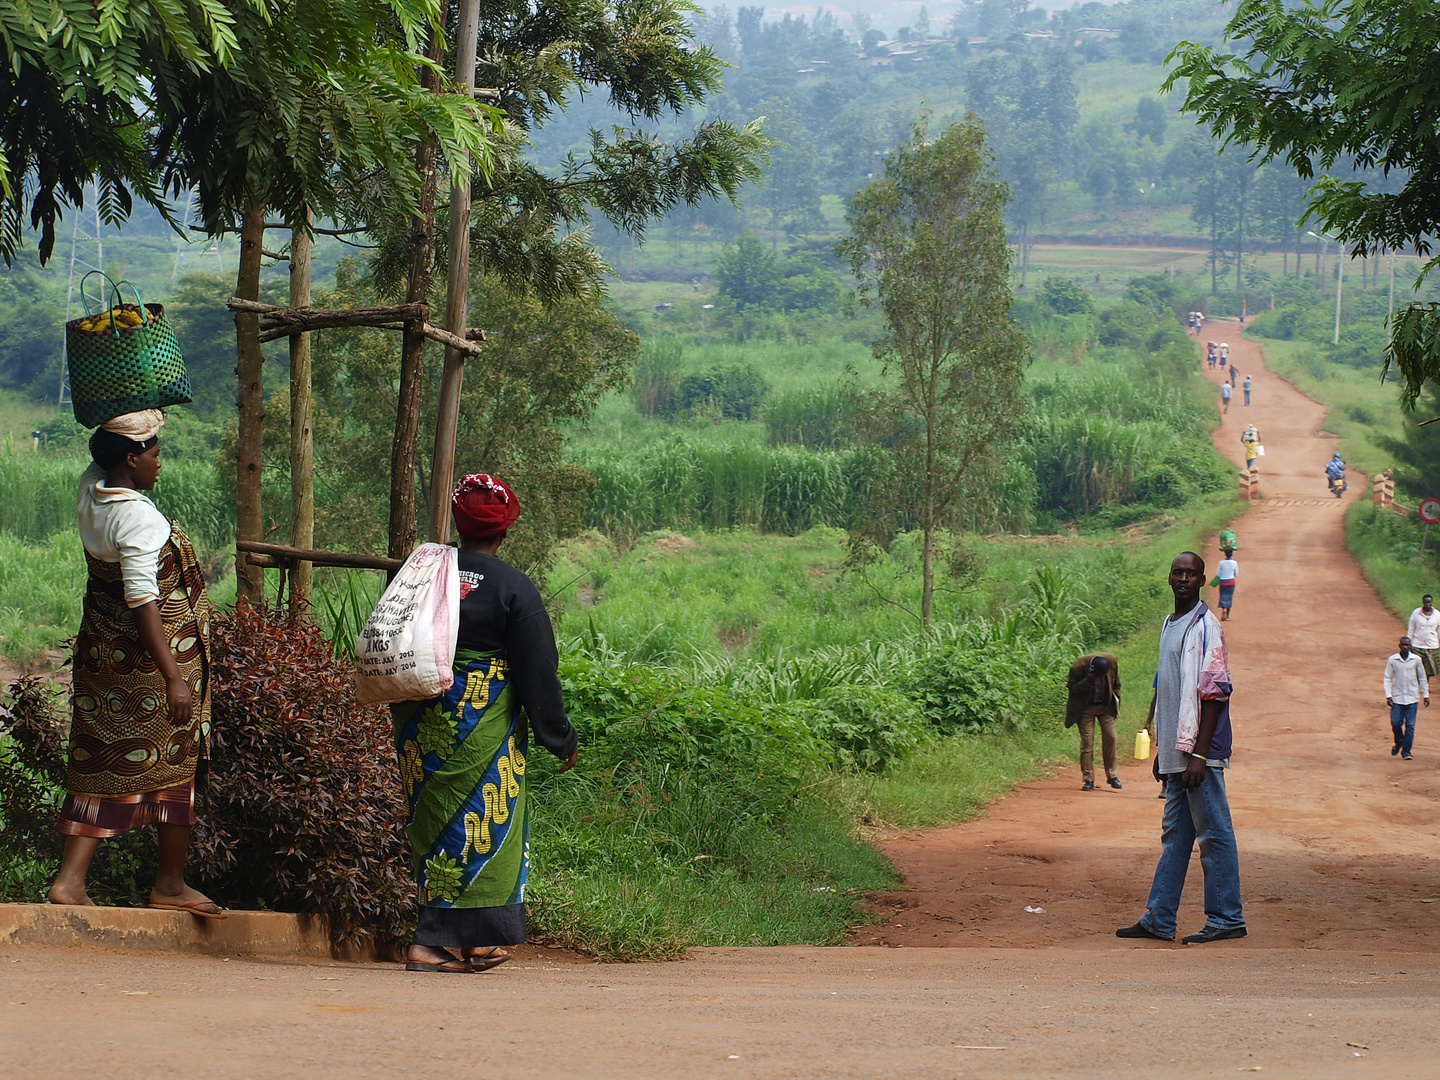 On the street | Kigali | Rwanda | 2014